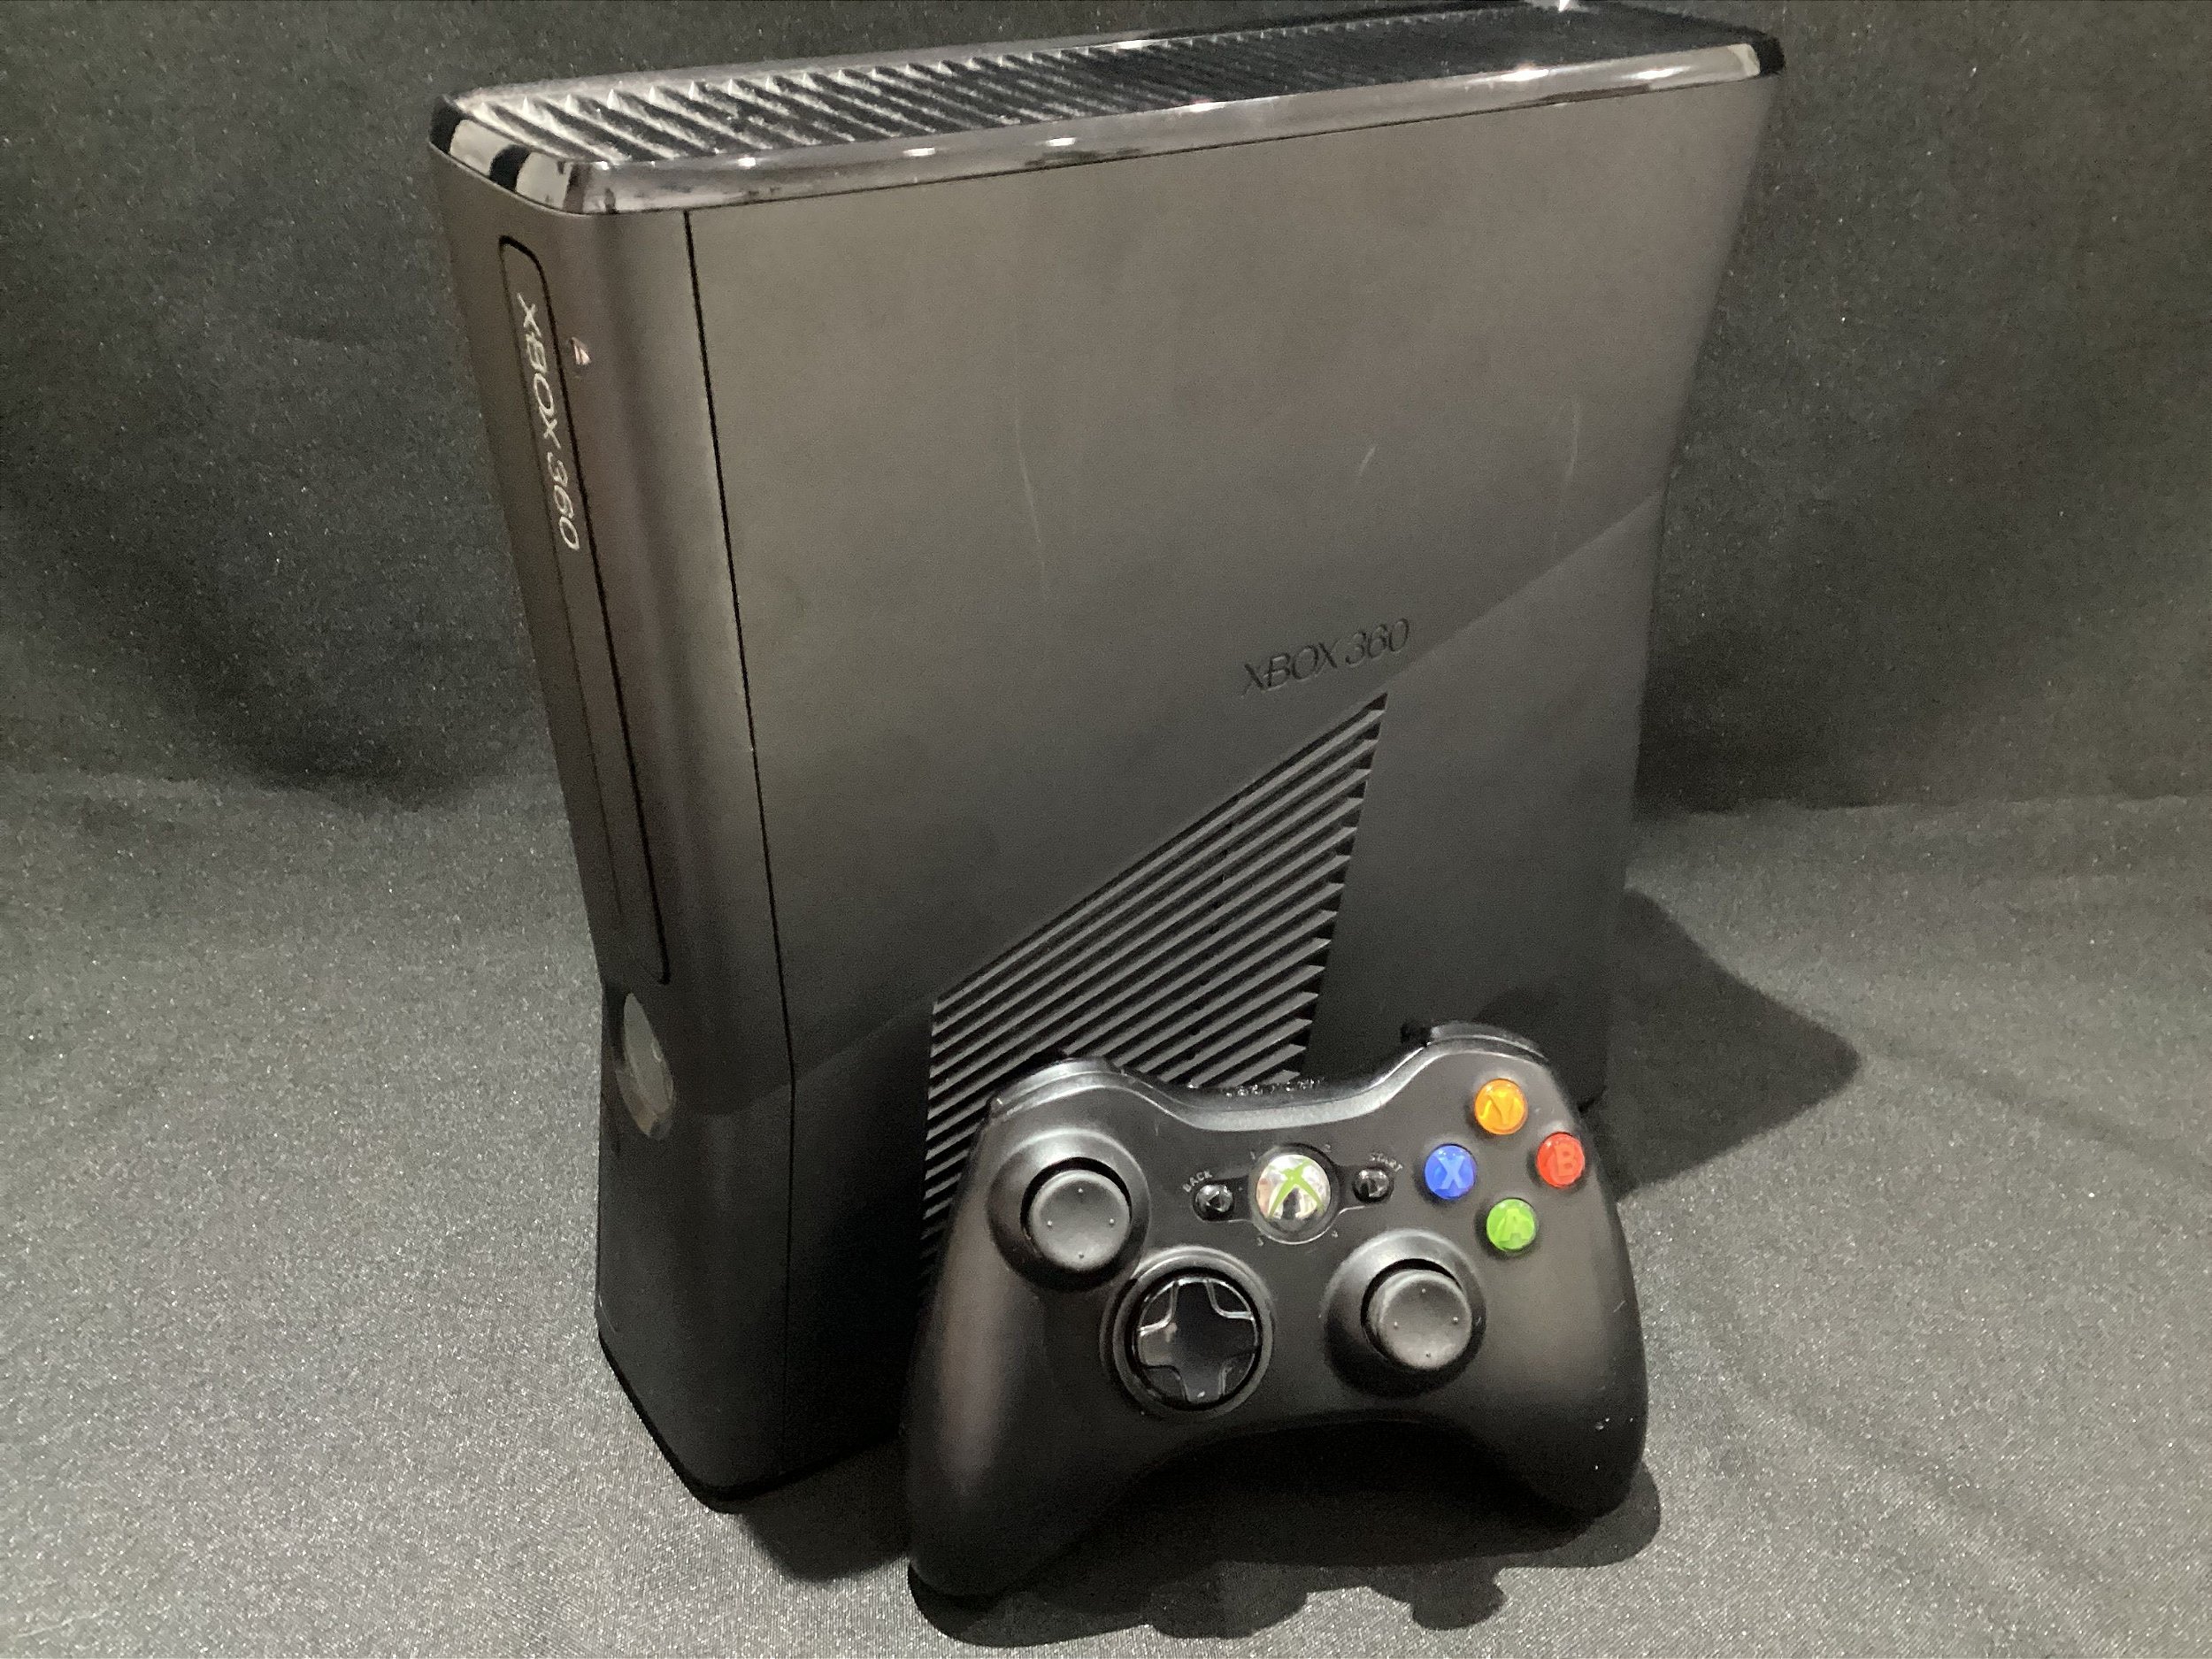 Microsoft Xbox 360 Super Slim 4gb Standard Desbloqueado + Kinect + 2  Controles + 1 Jogo Kinect Adventures!